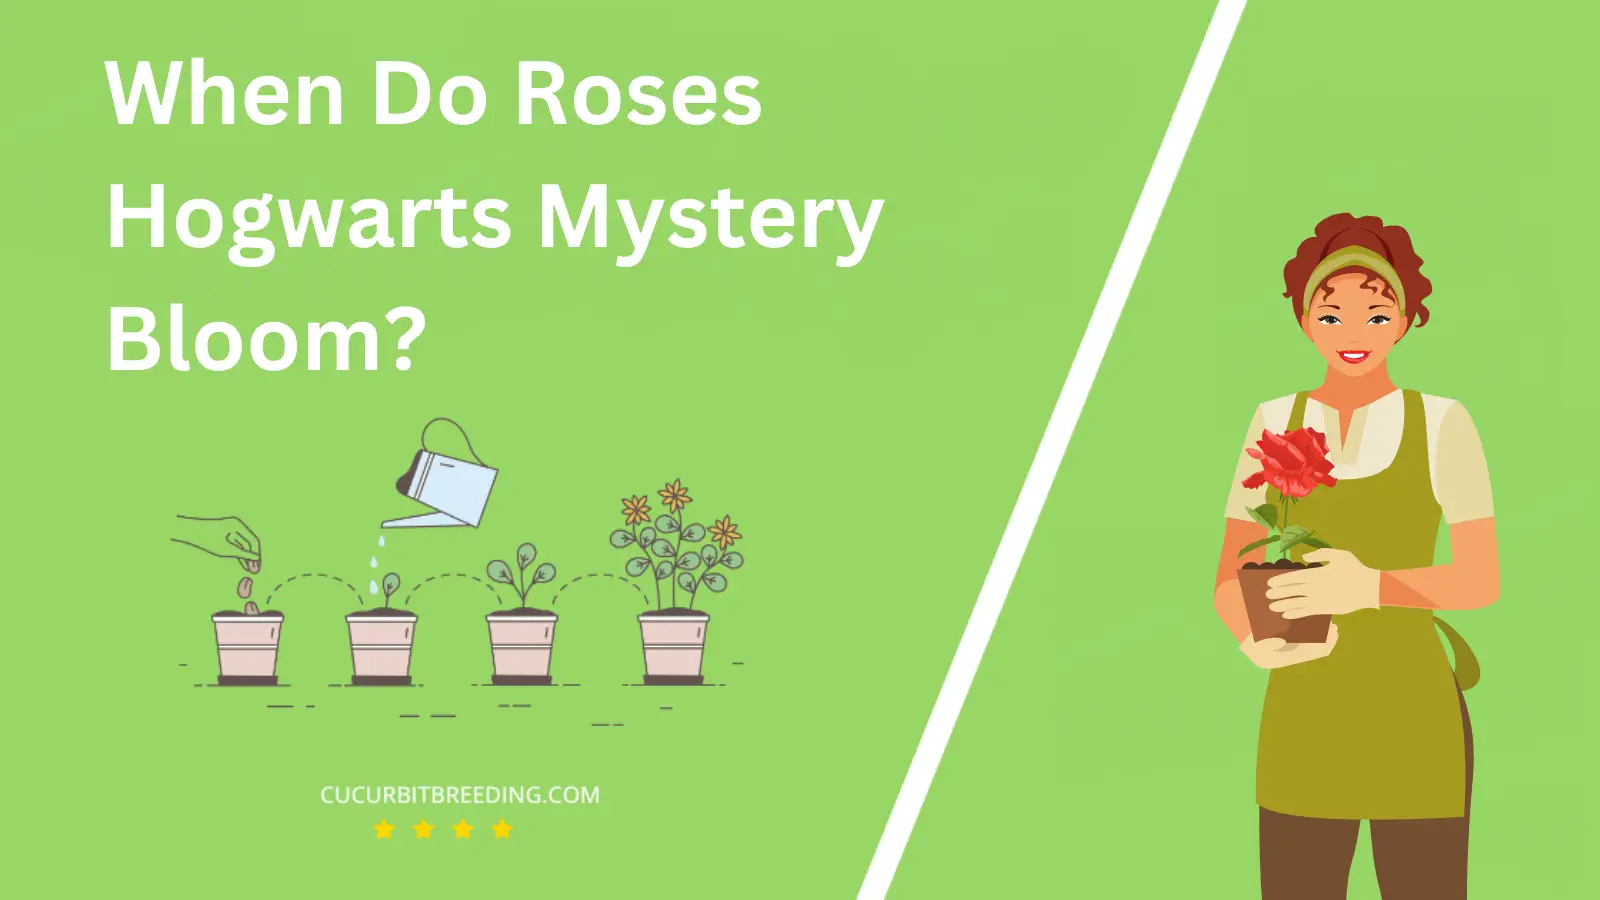 When Do Roses Hogwarts Mystery Bloom?